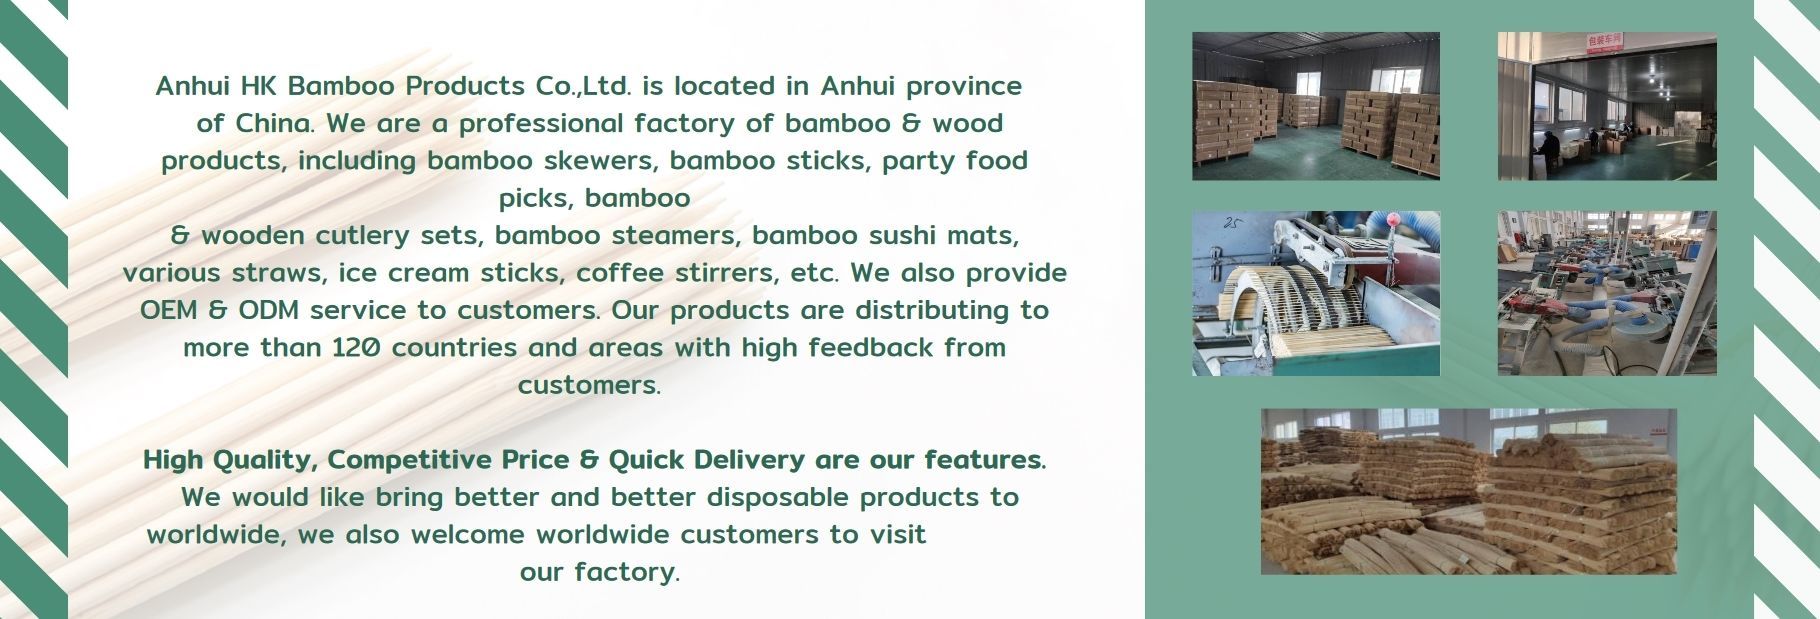 anhui hk bamboo product co.,ltd